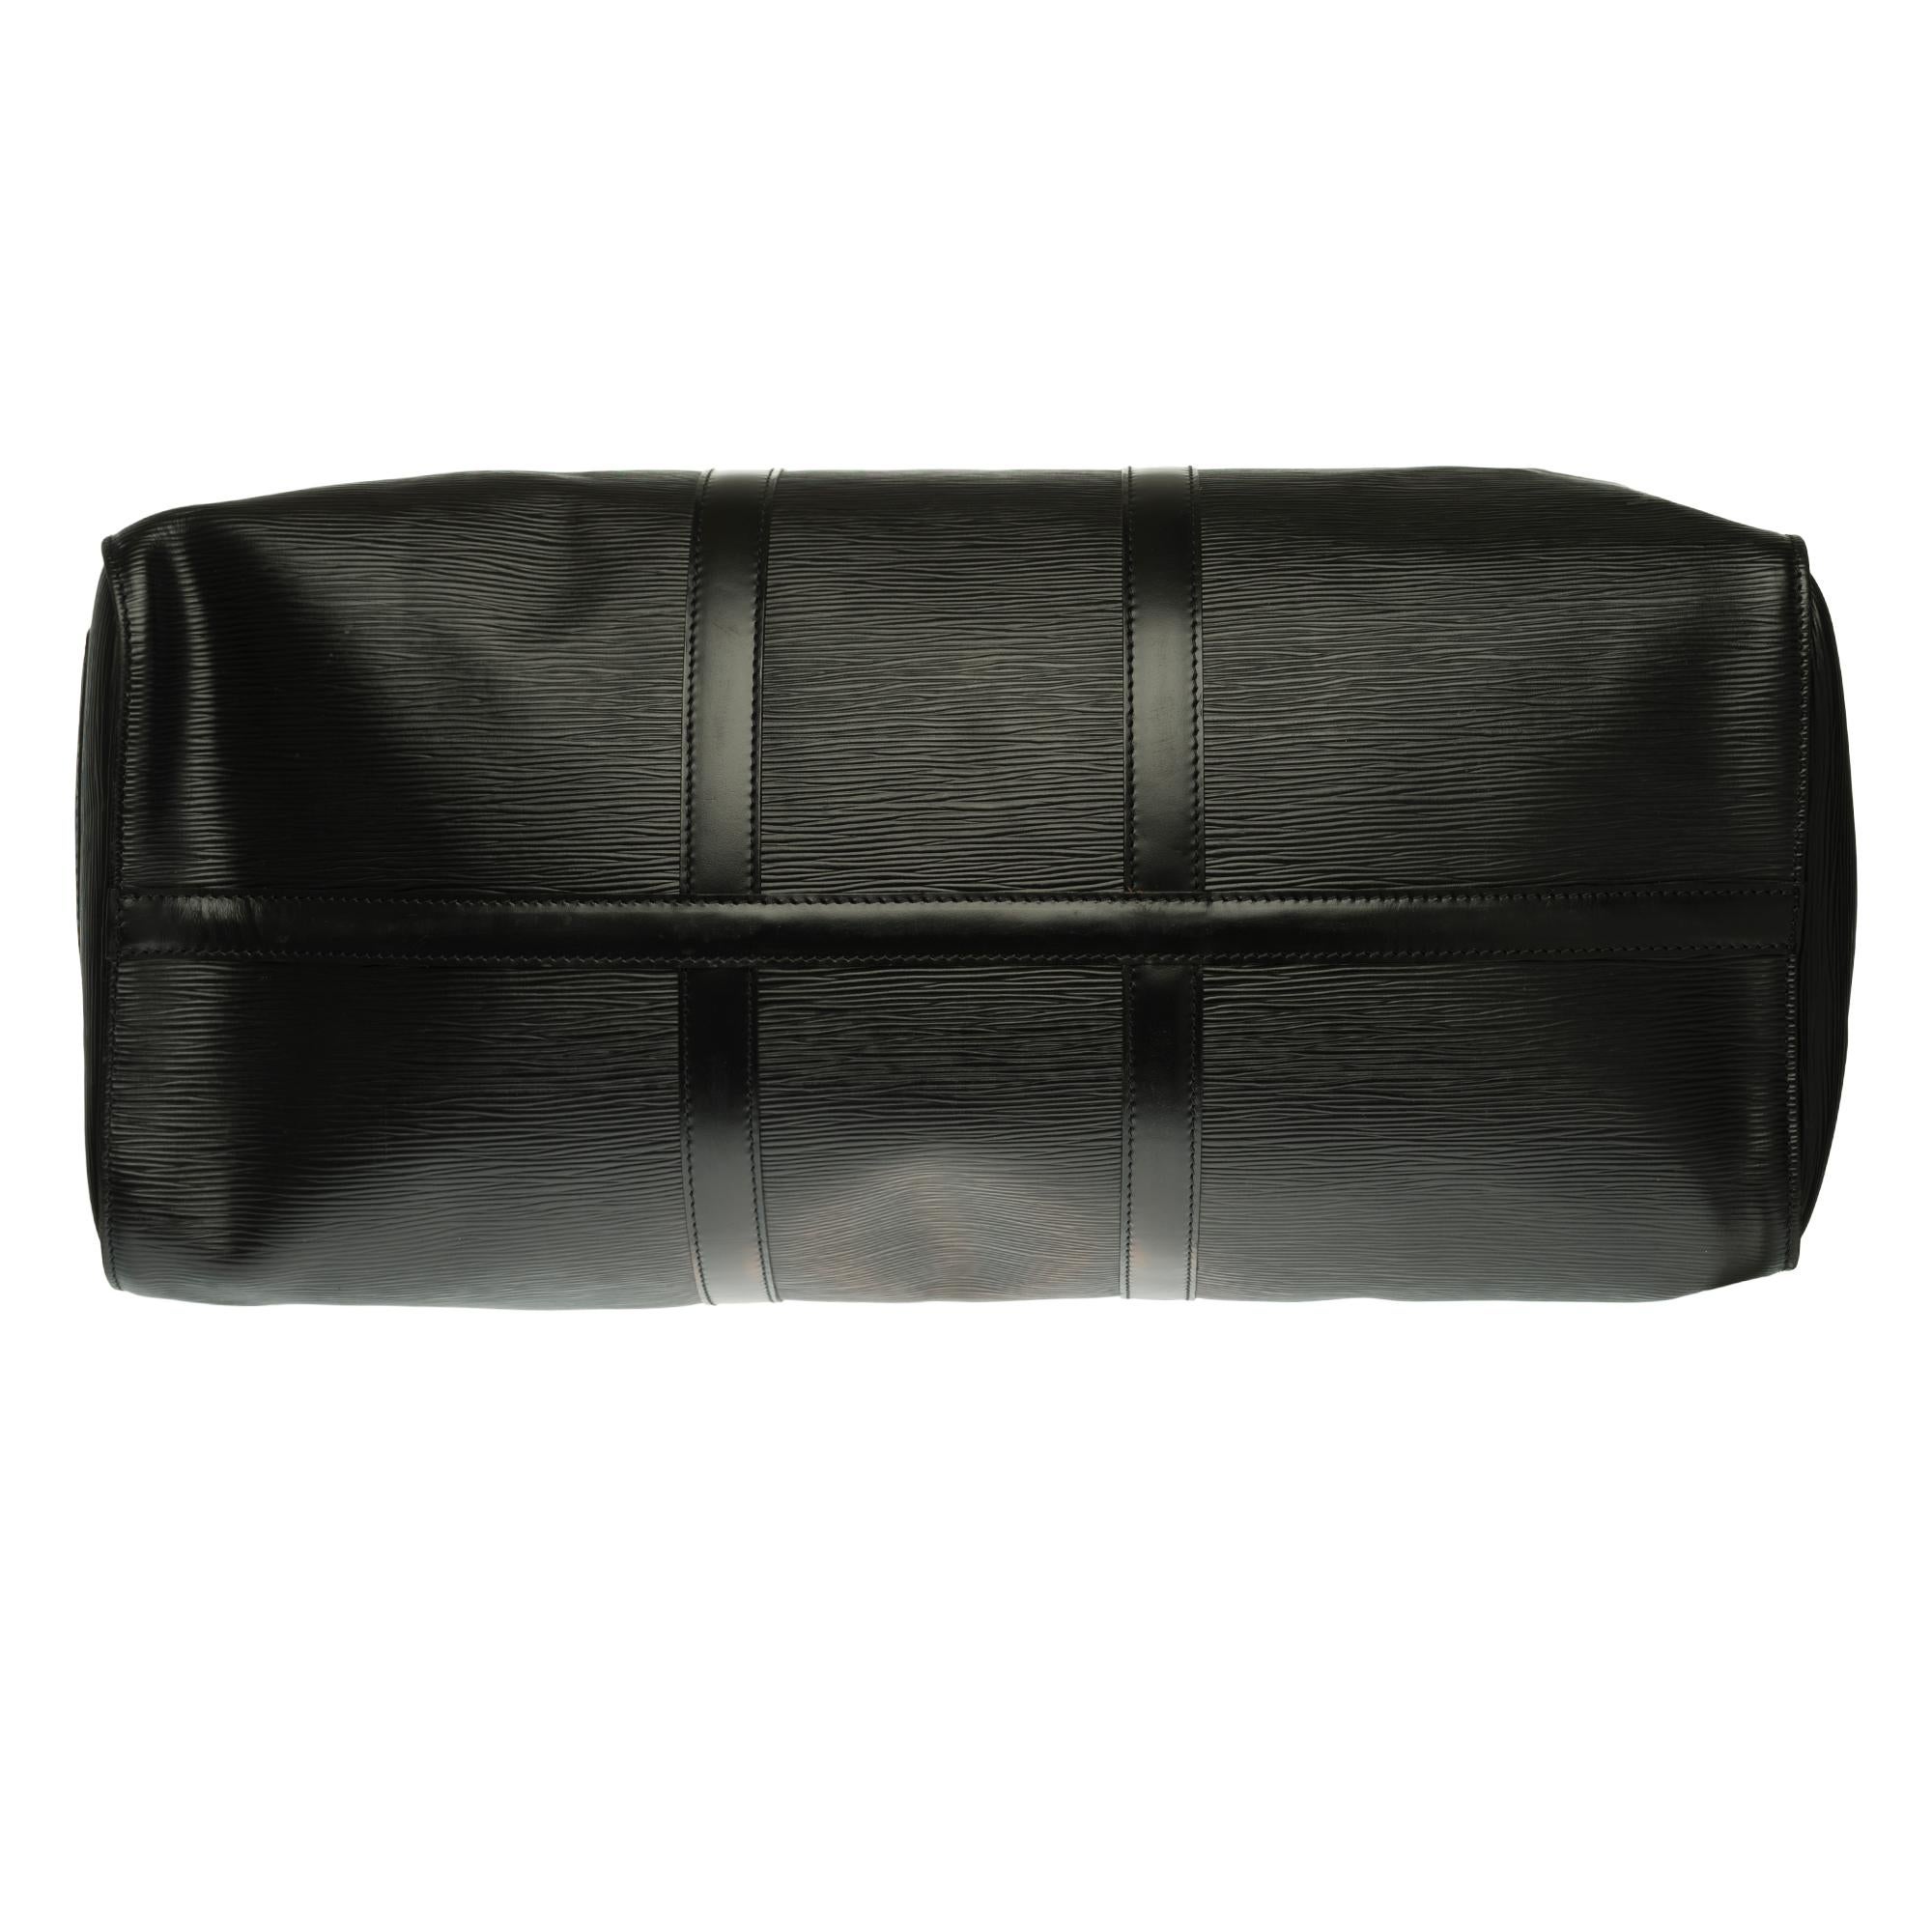 Louis Vuitton Keepall 50 Travel bag in black épi leather 5